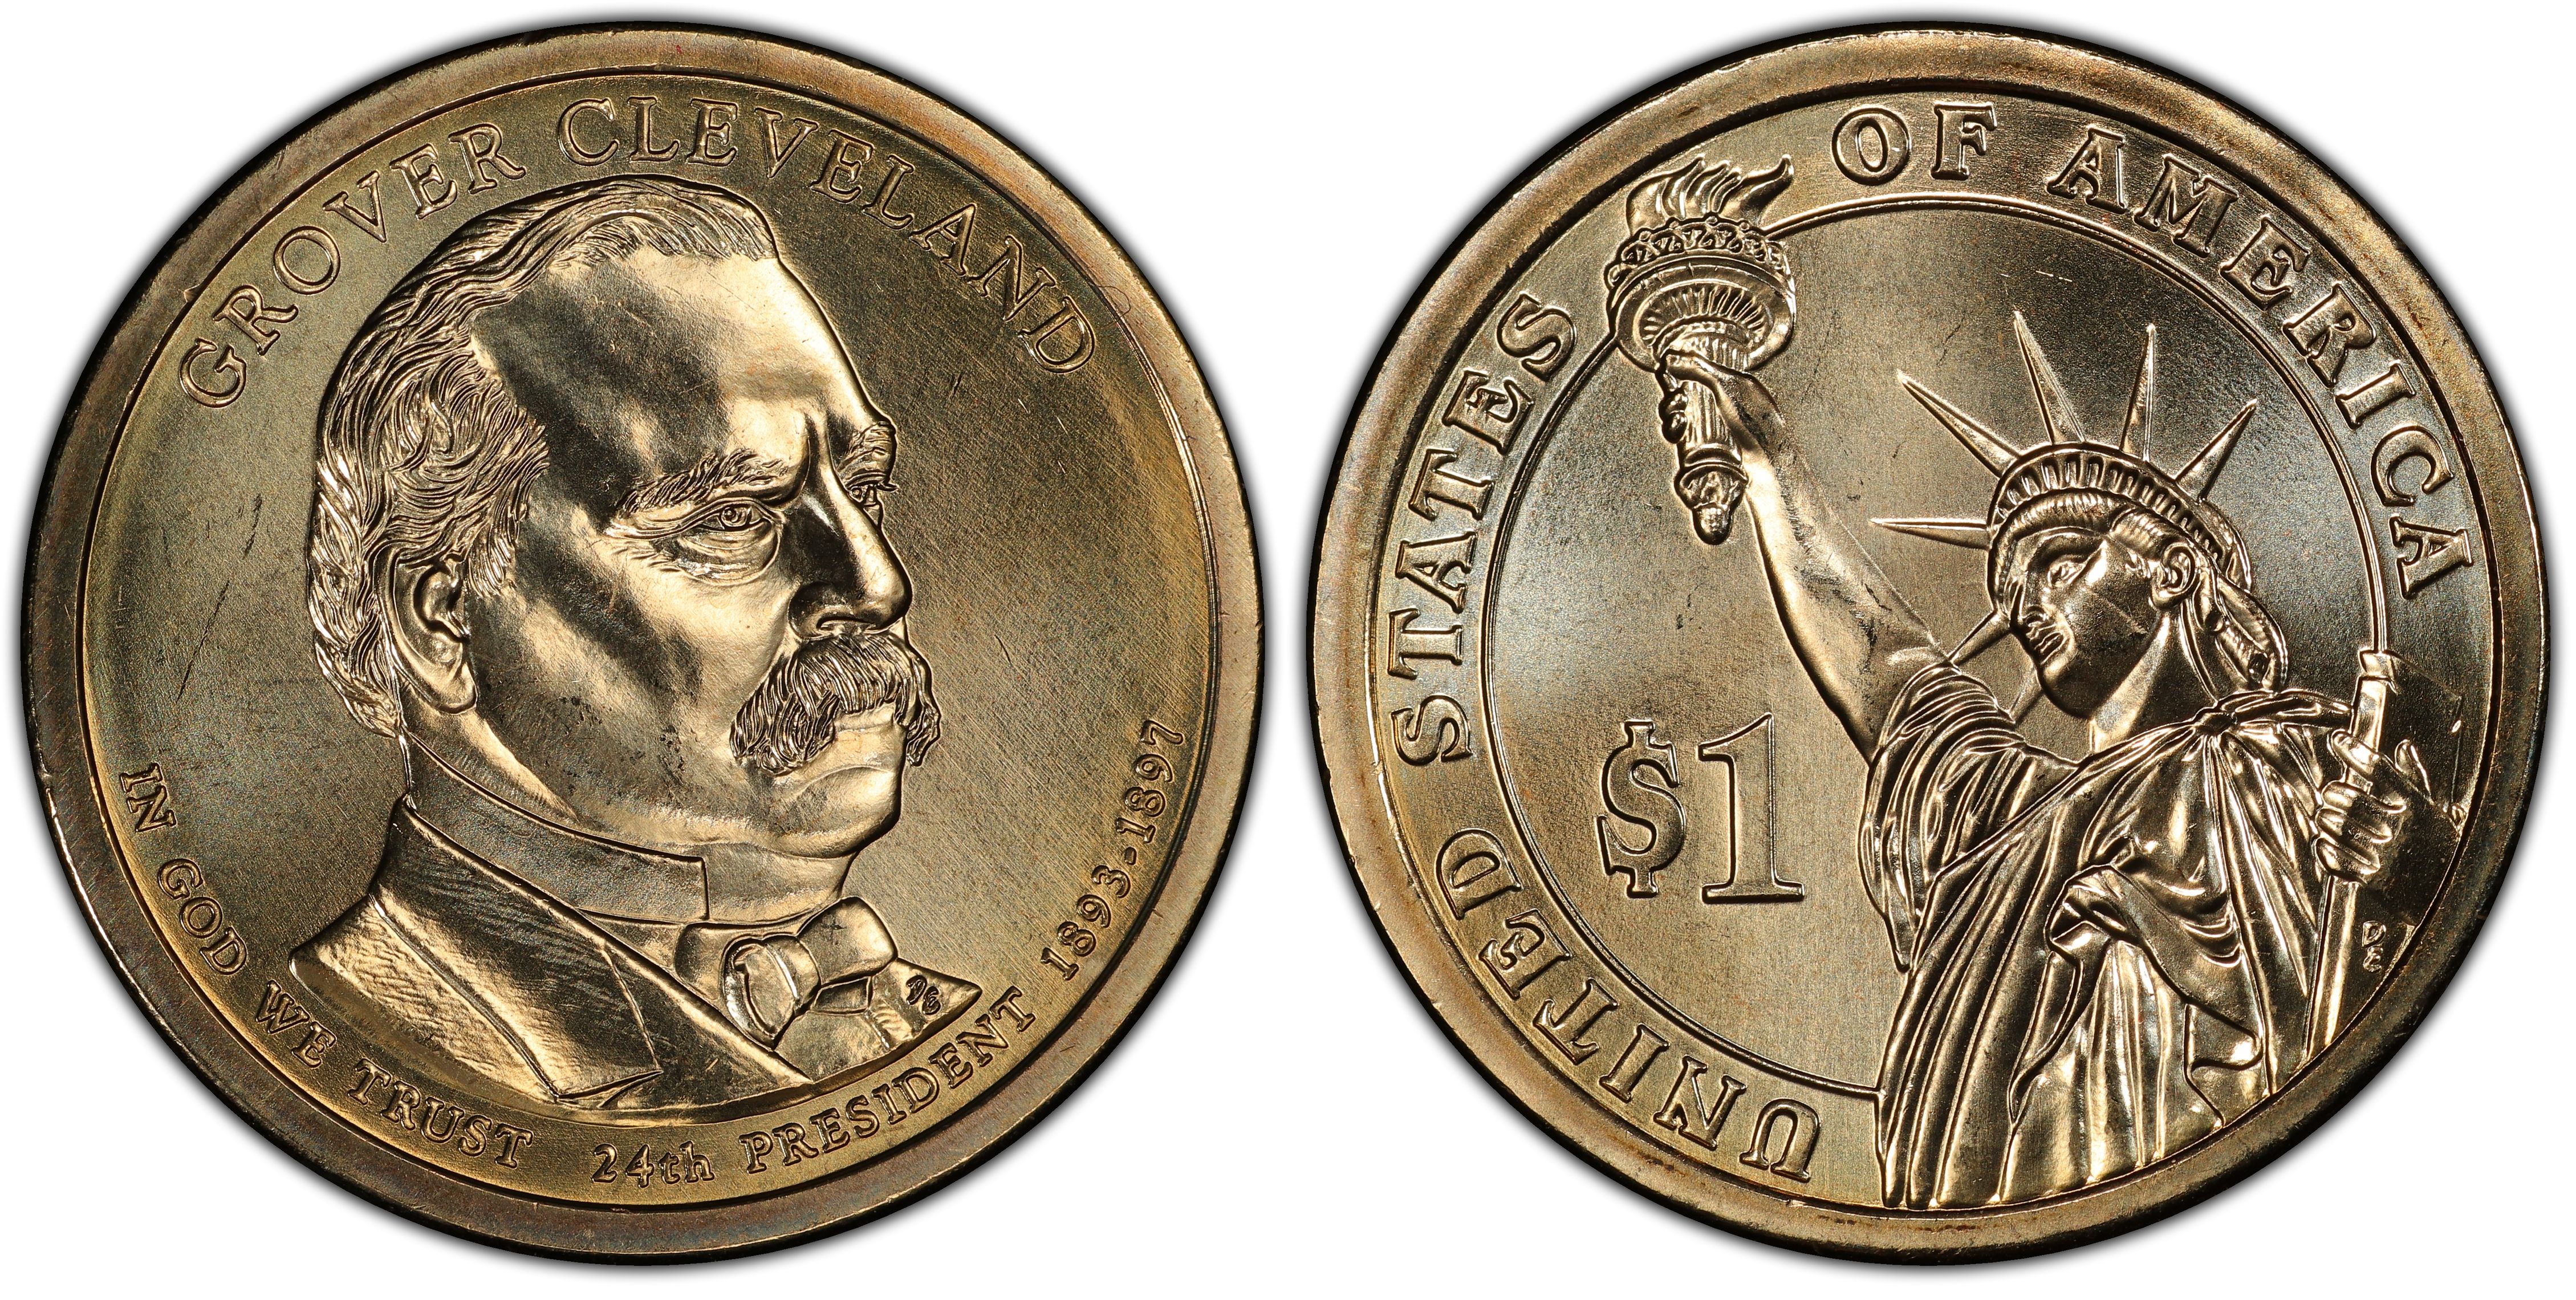 2012 WAFFLED error Grover Cleveland $1 Dollar coin 